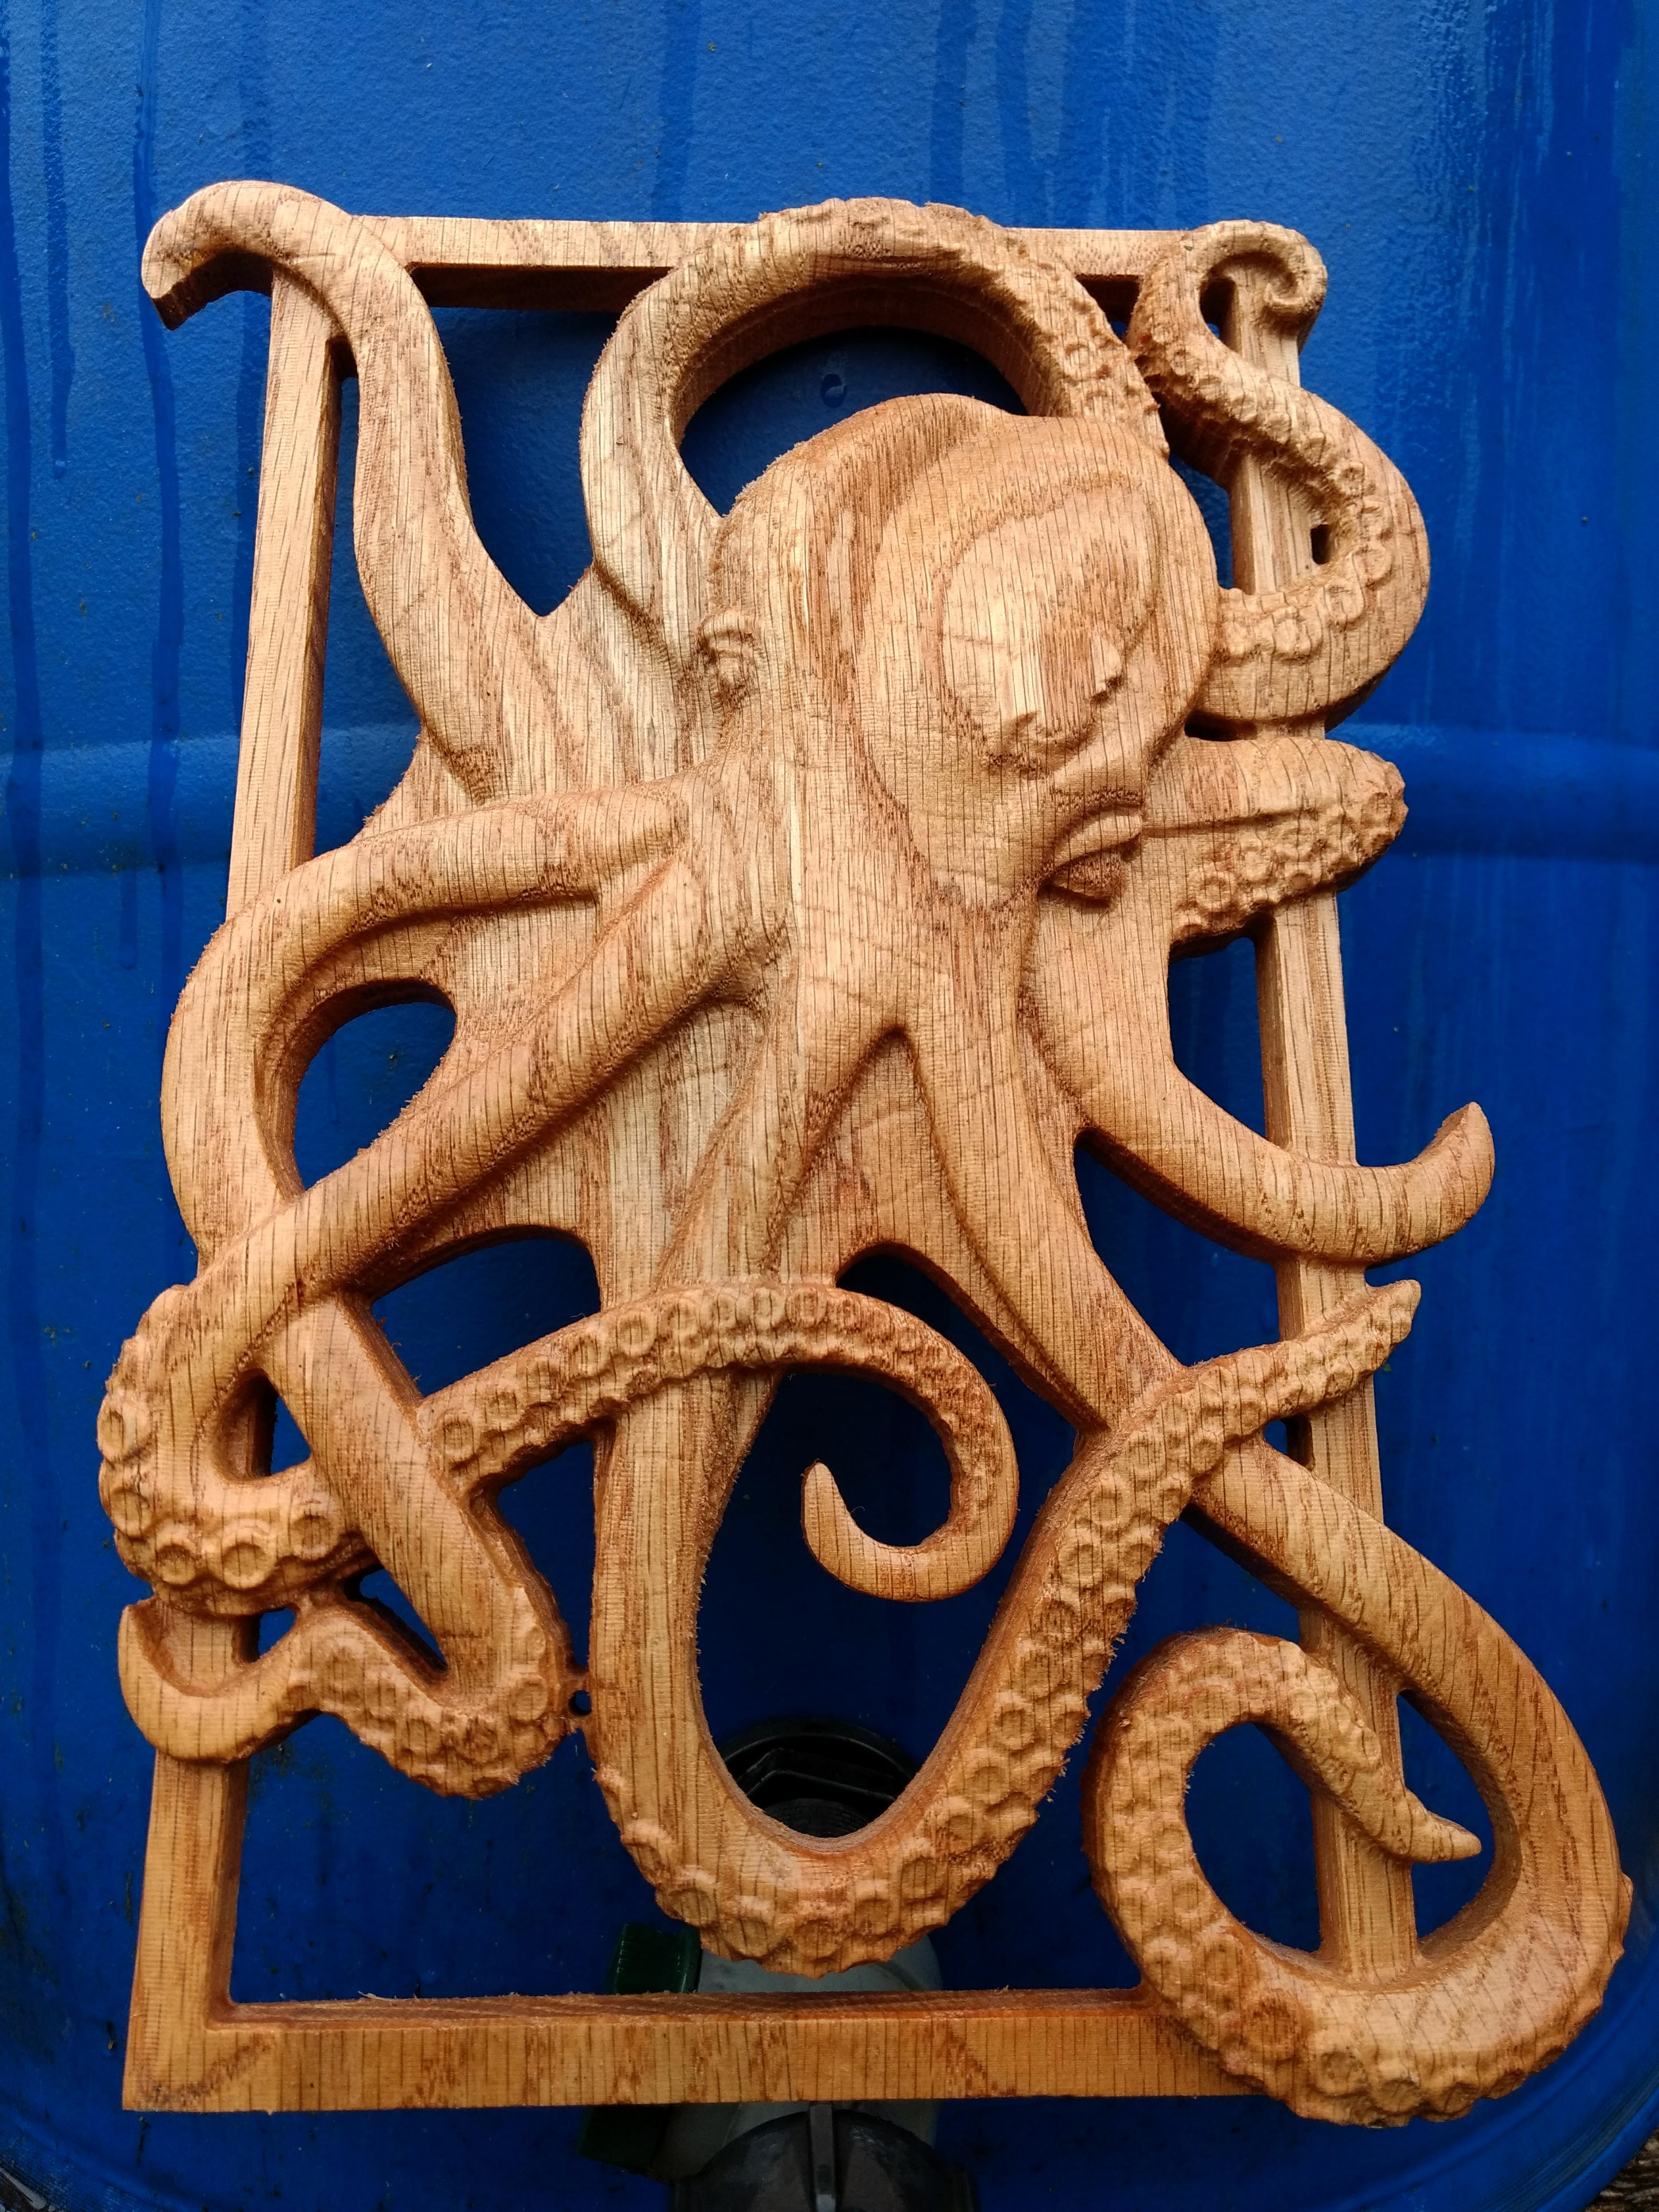 Octopus on wood